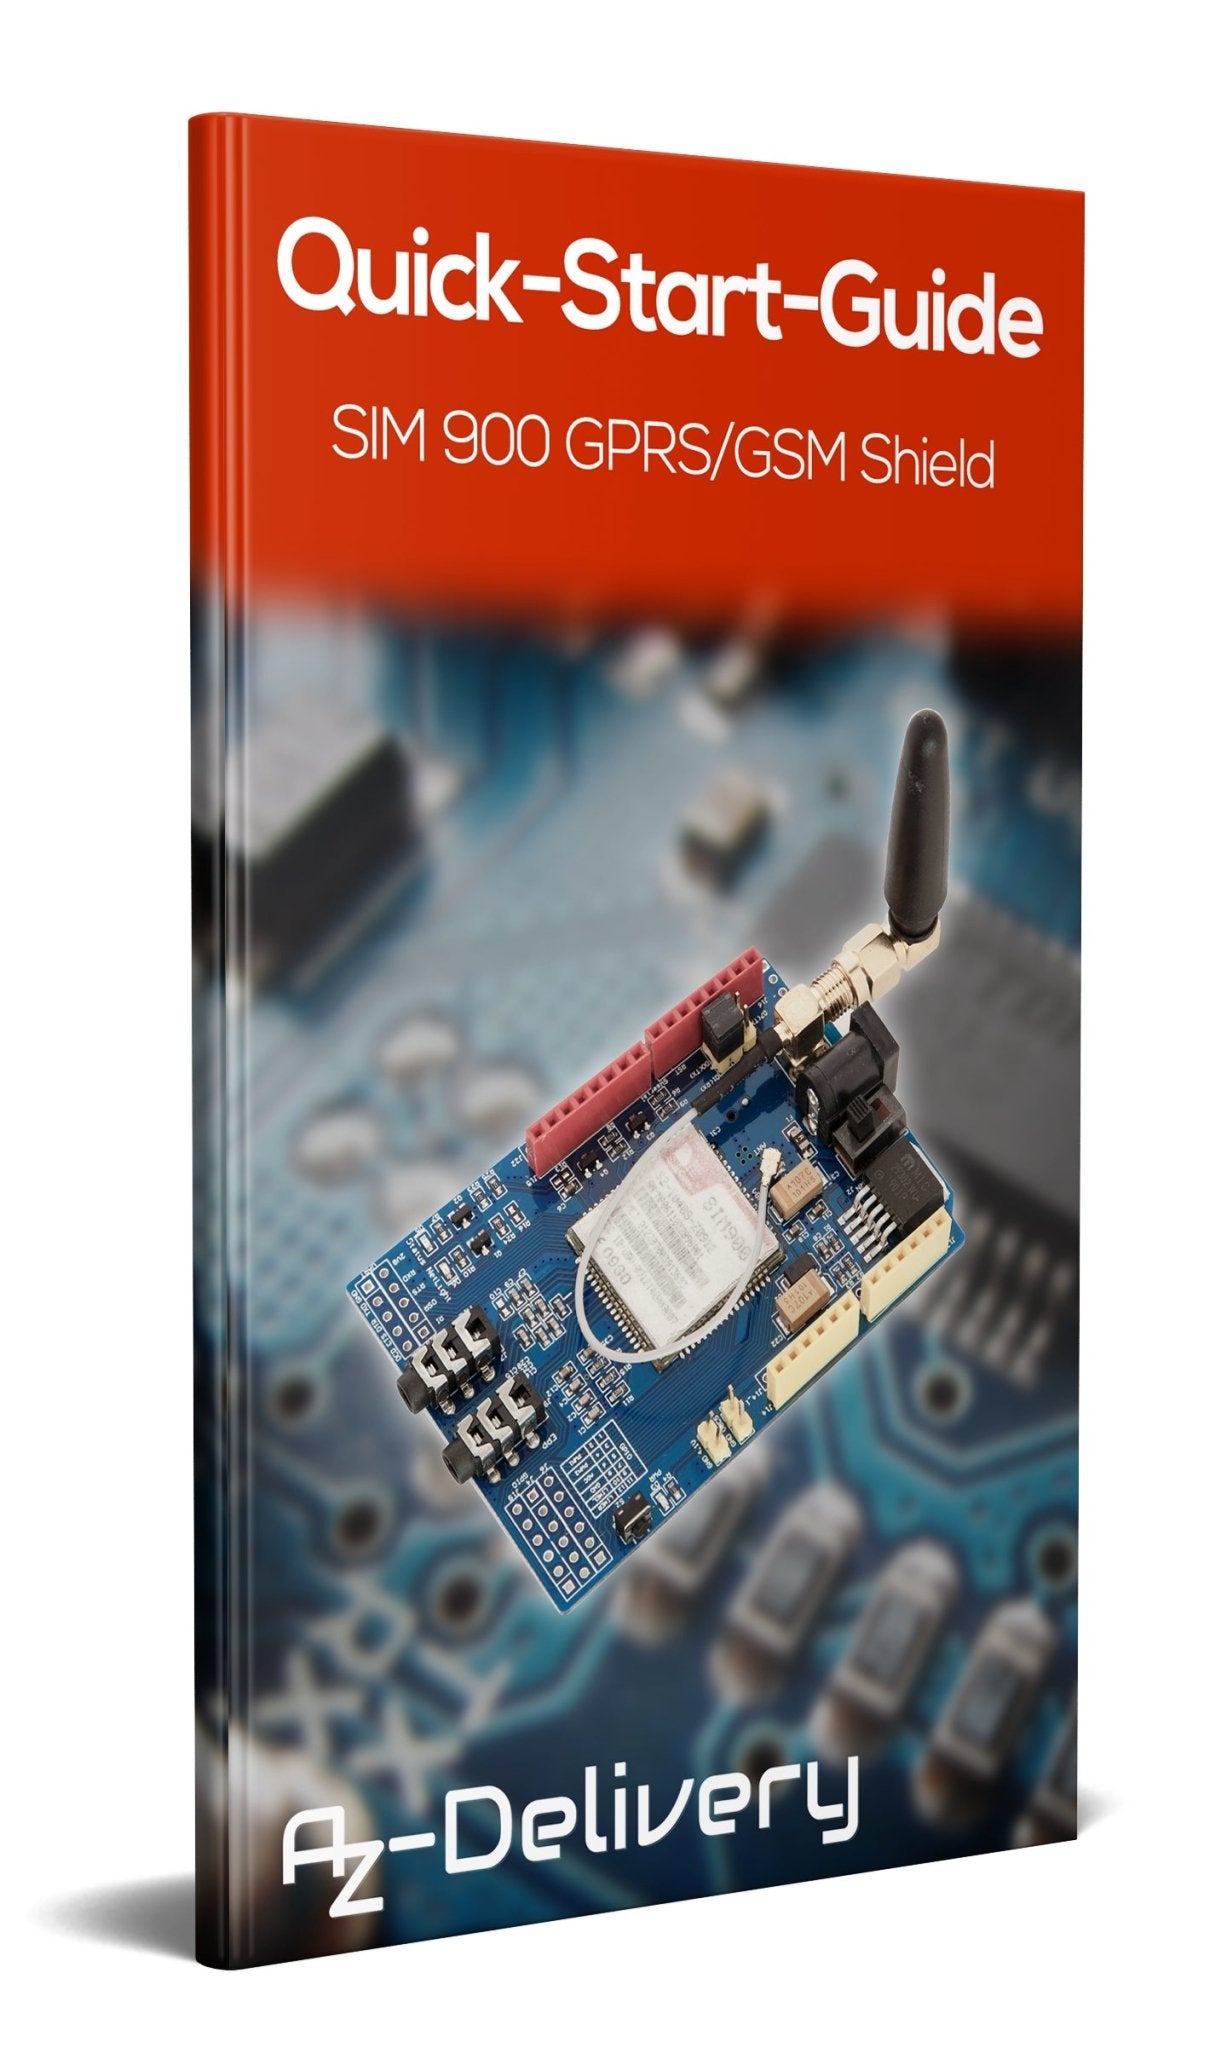 SIM 900 GPRS/GSM Shield - AZ-Delivery